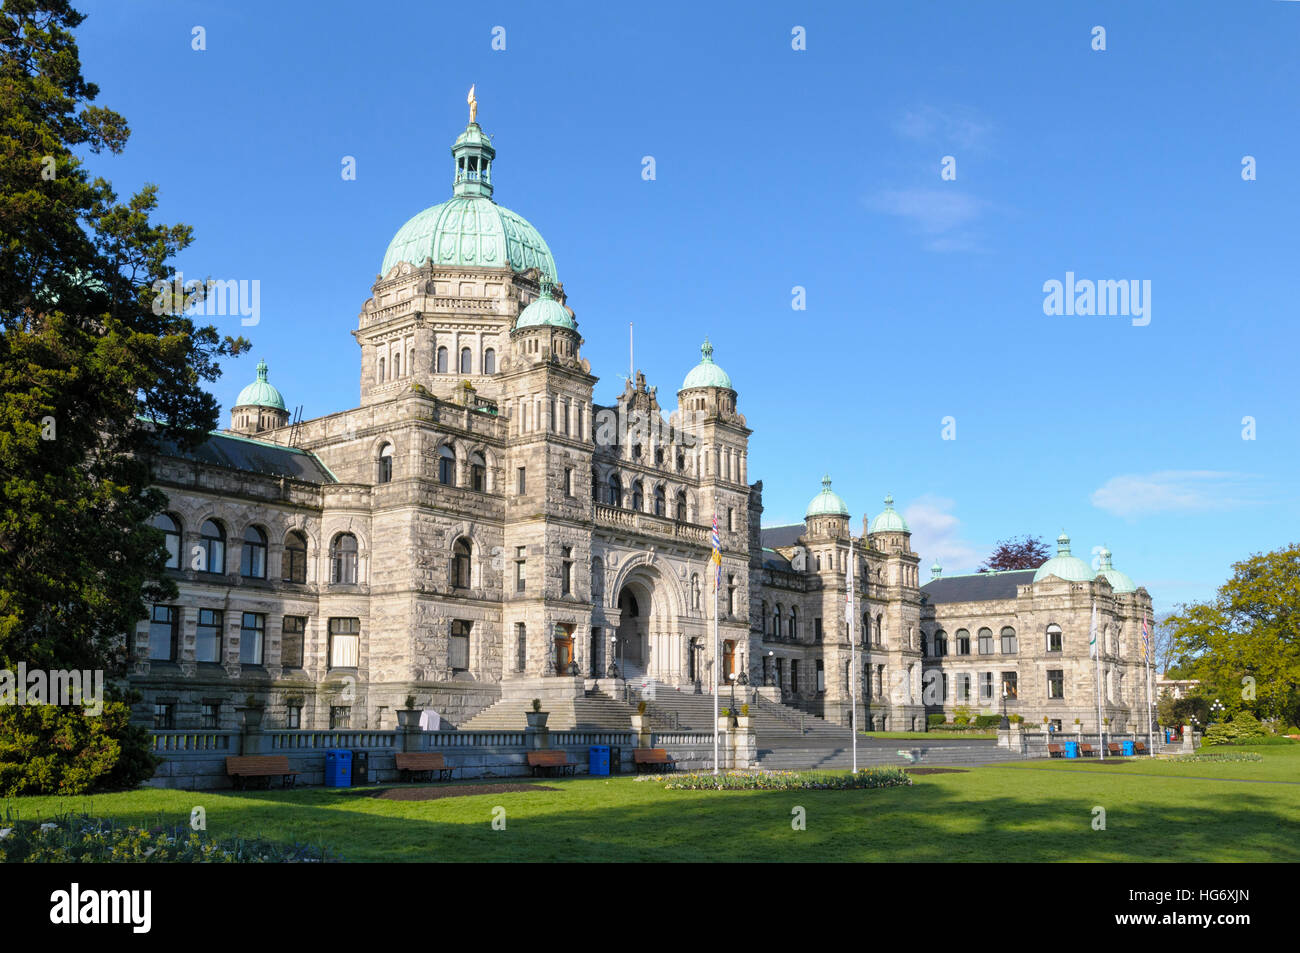 Parlamentsgebäude von British Columbia, Vancouver Island, British Columbia, BC, Kanada Stockfoto